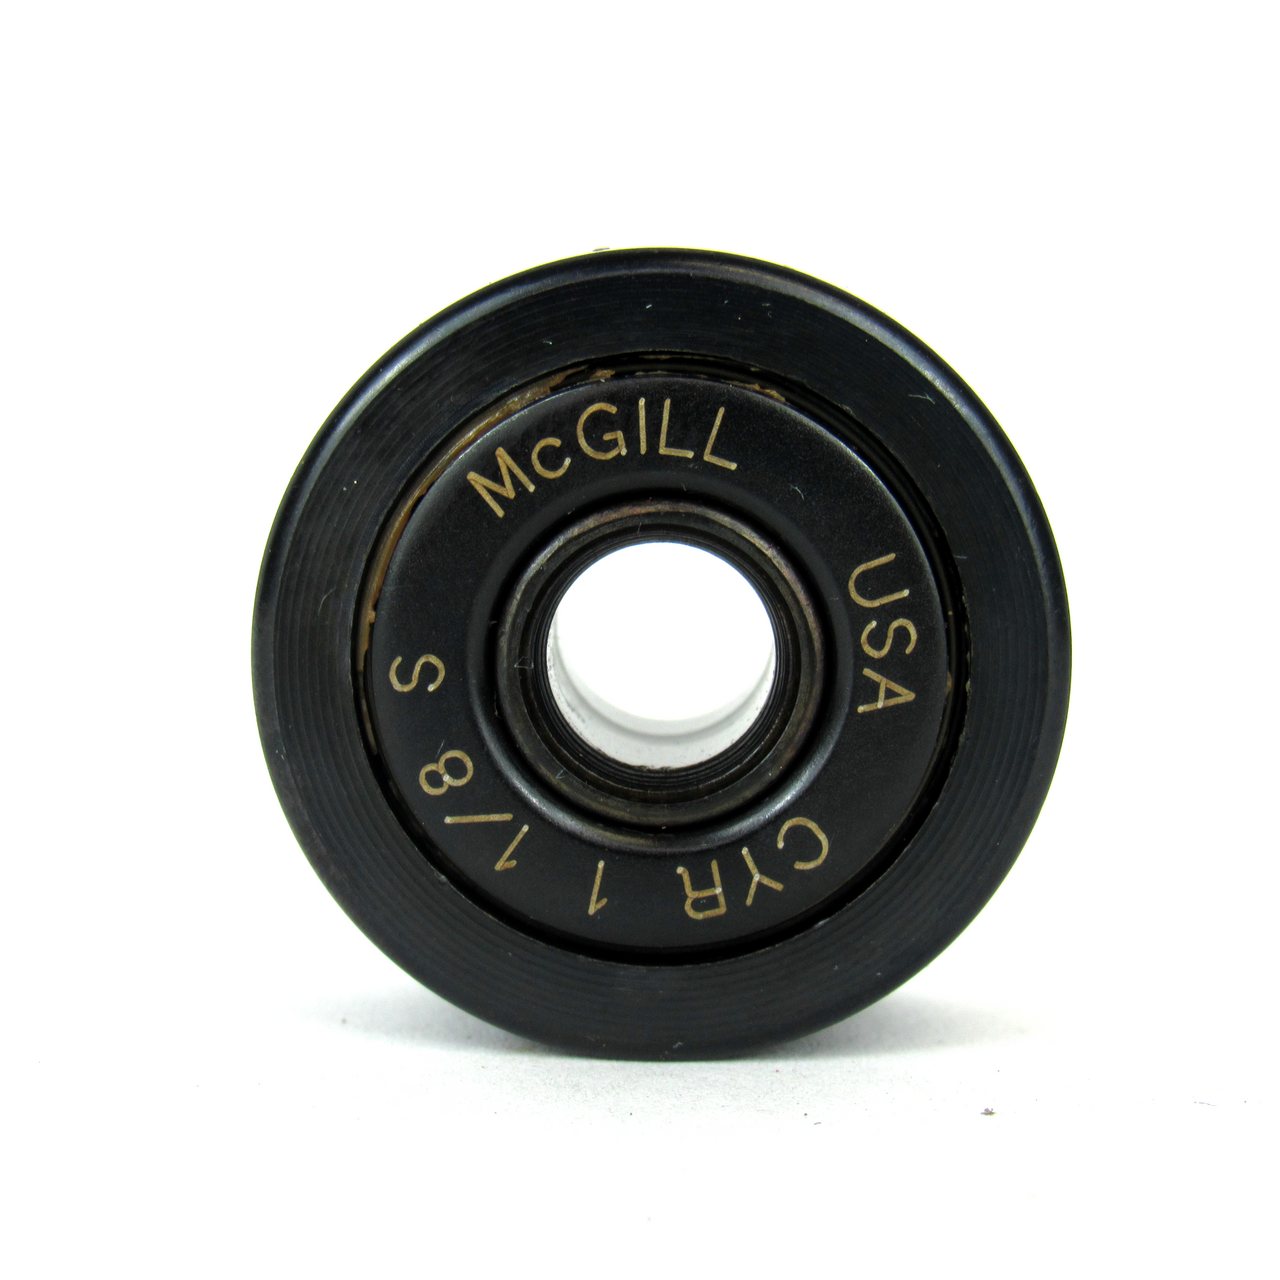 McGill CYR 1 1/8 S Crowned & Flat Yoke Rollers, 0.3125" Bore Diameter